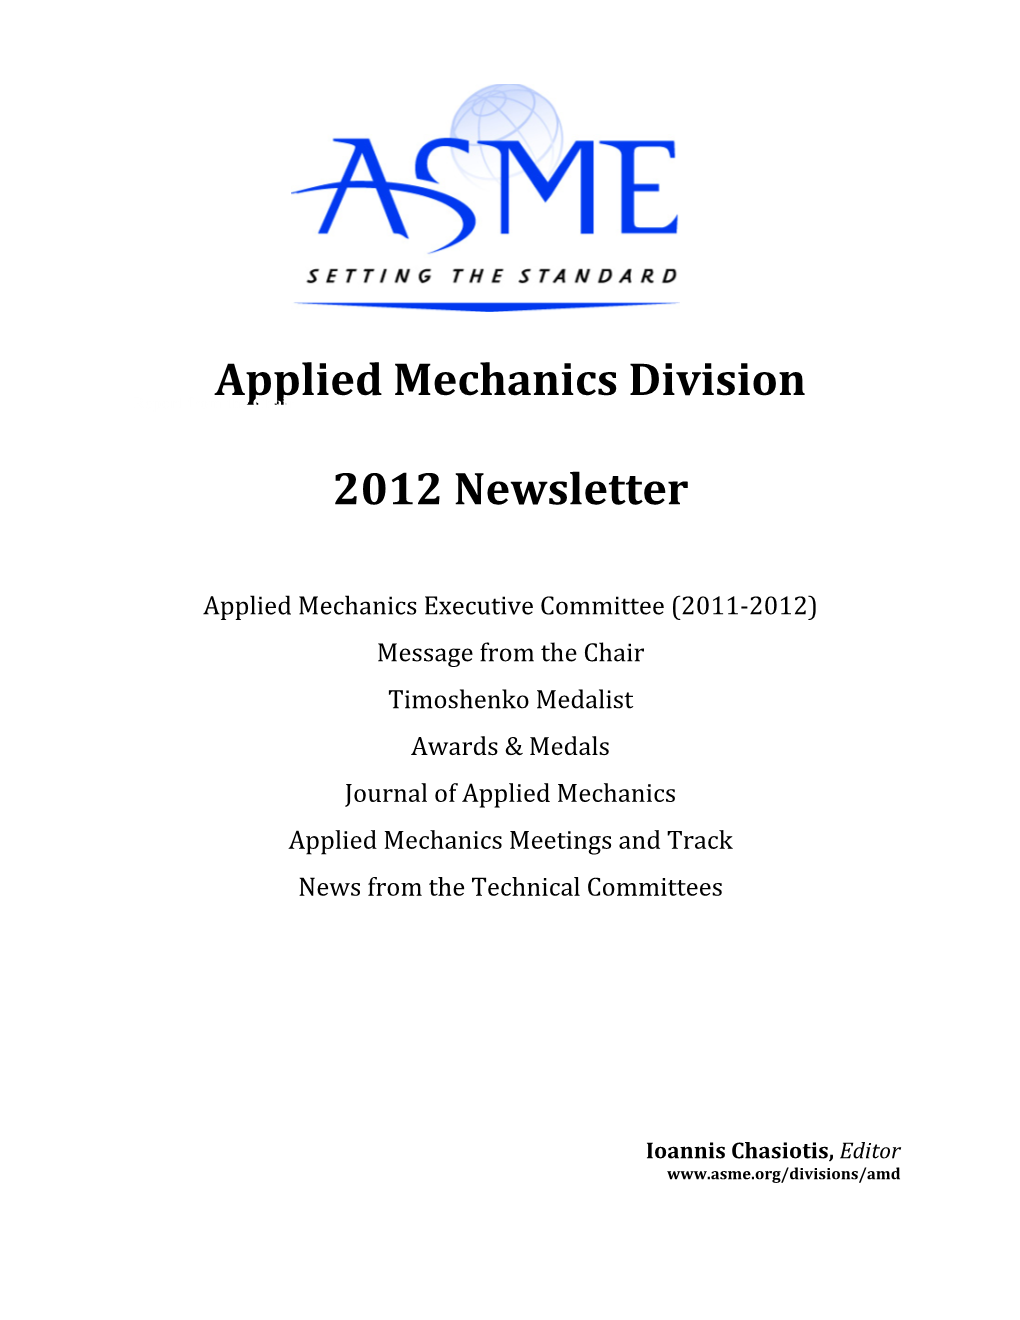 Applied Mechanics Division 2012 Newsletter